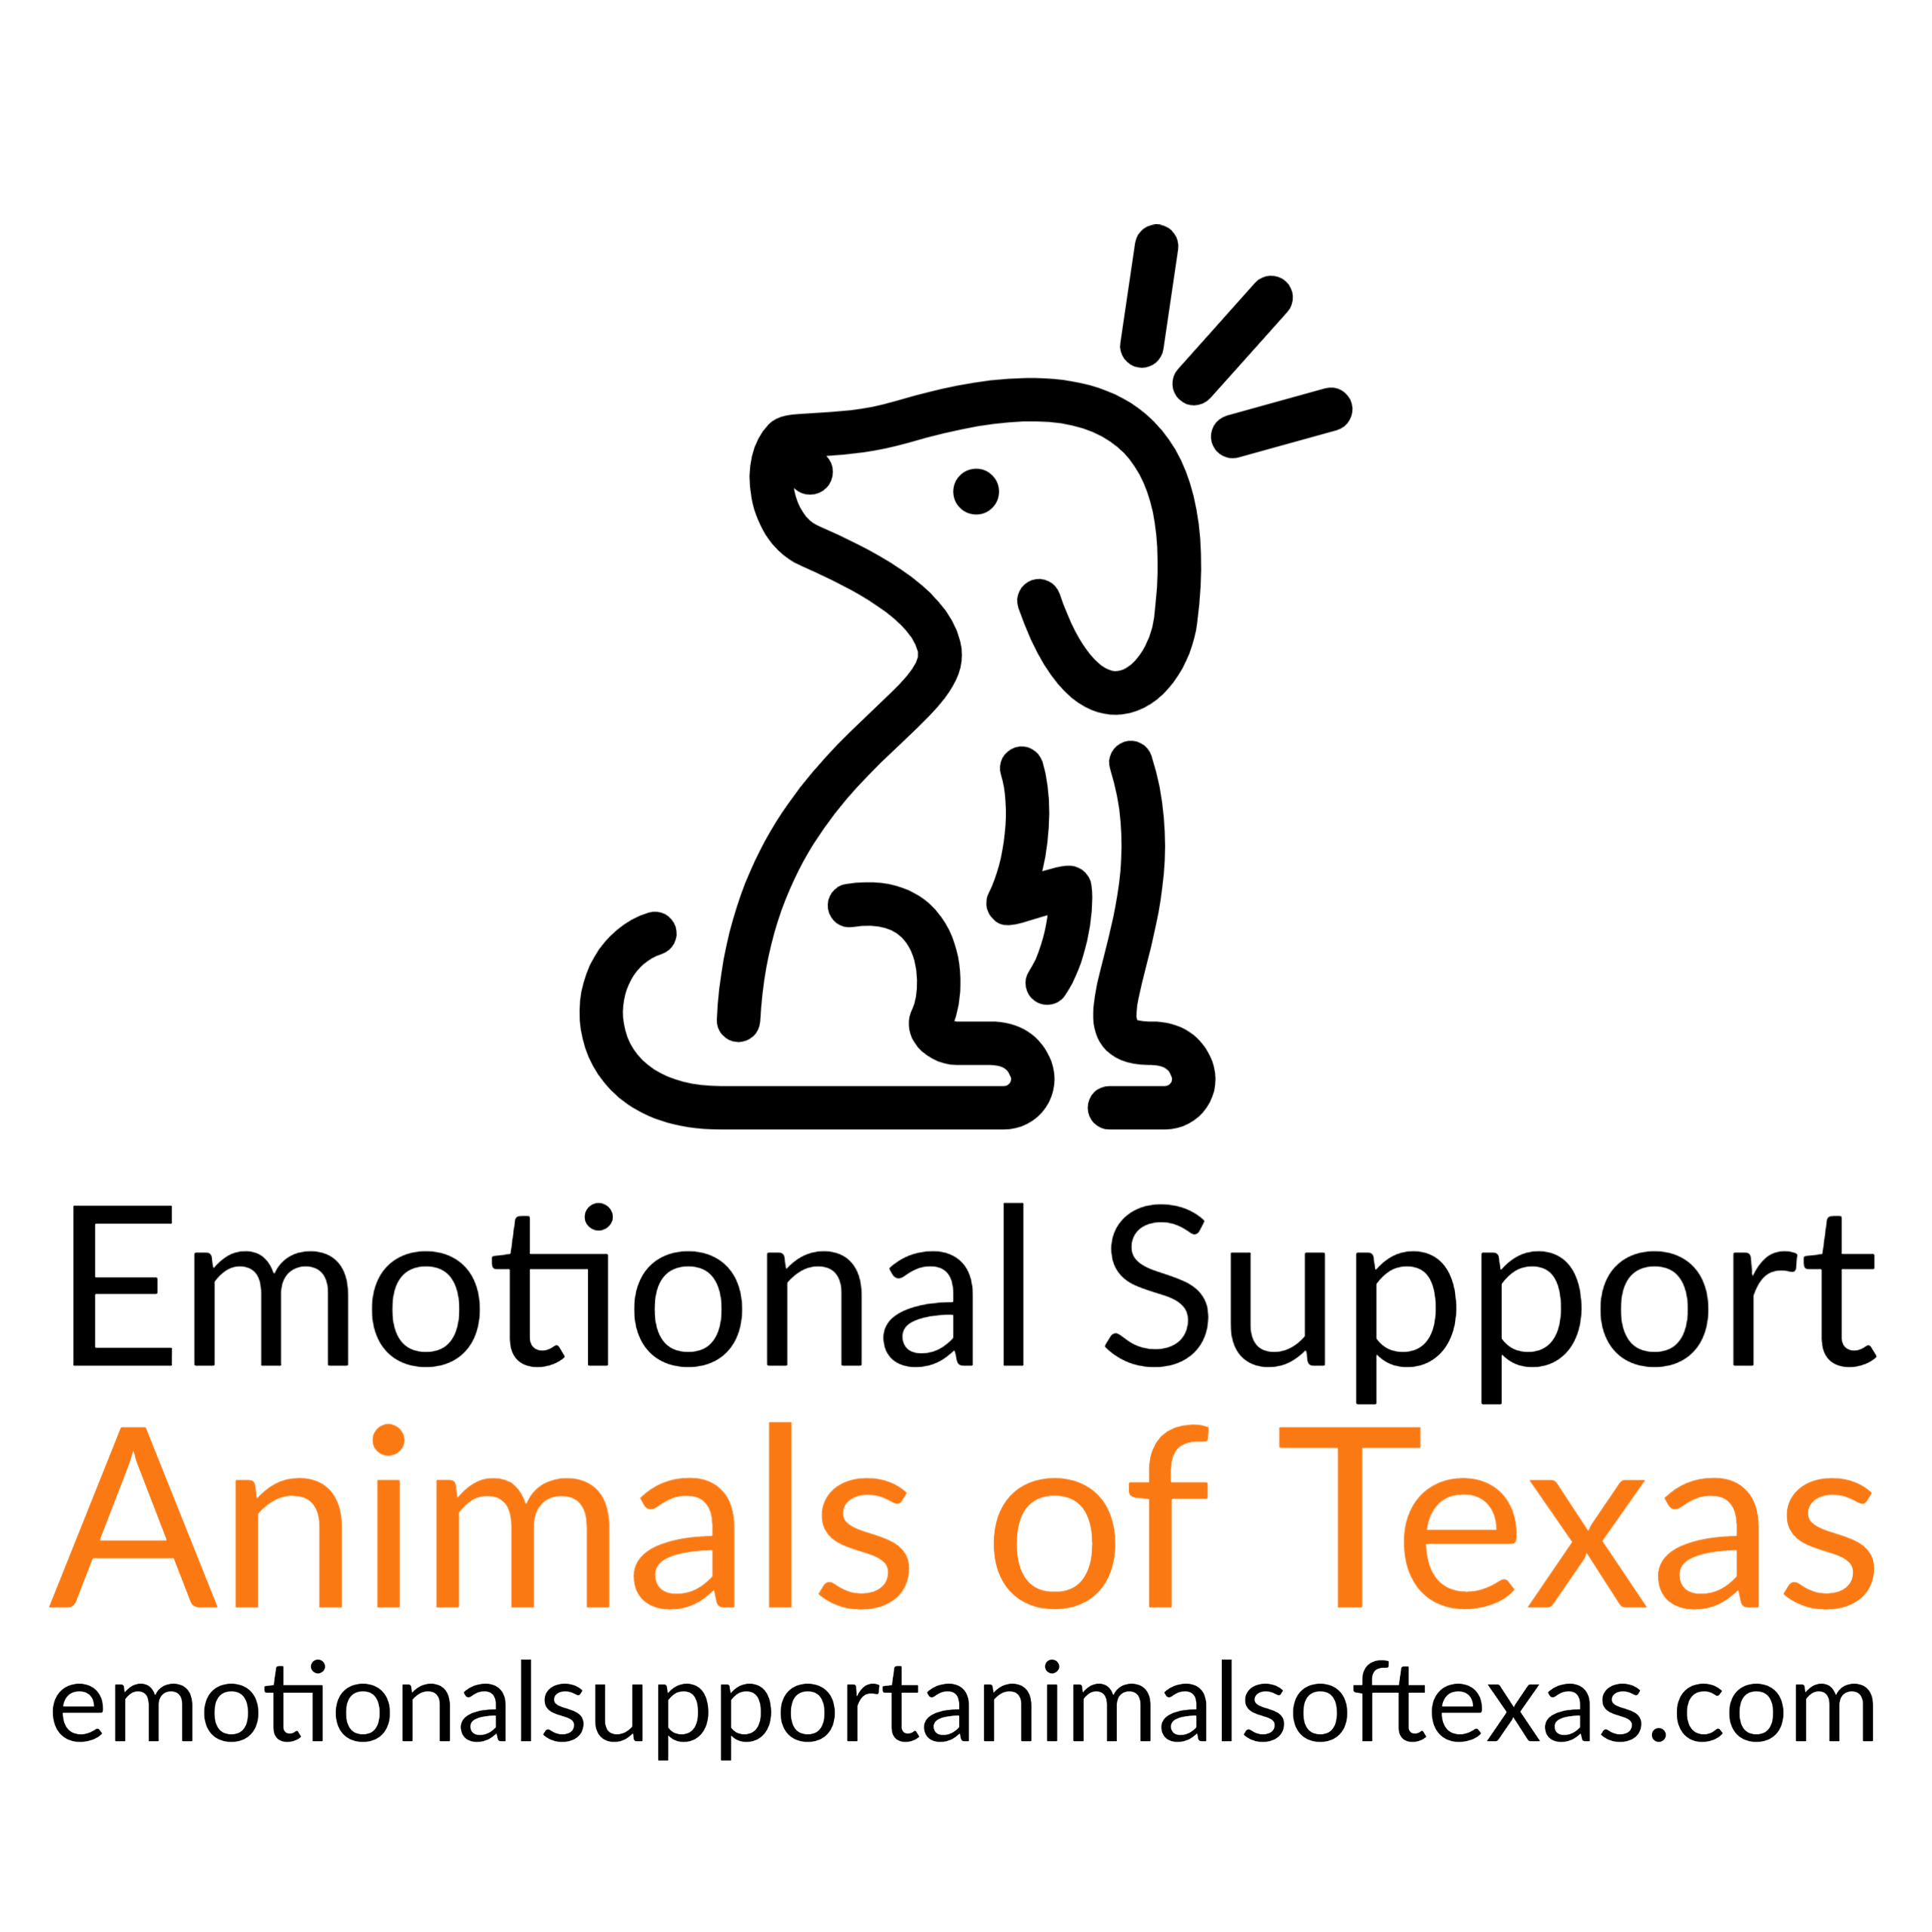 Emotional Support Animals of Texas https://emotionalsupportanimalsoftexas.com/